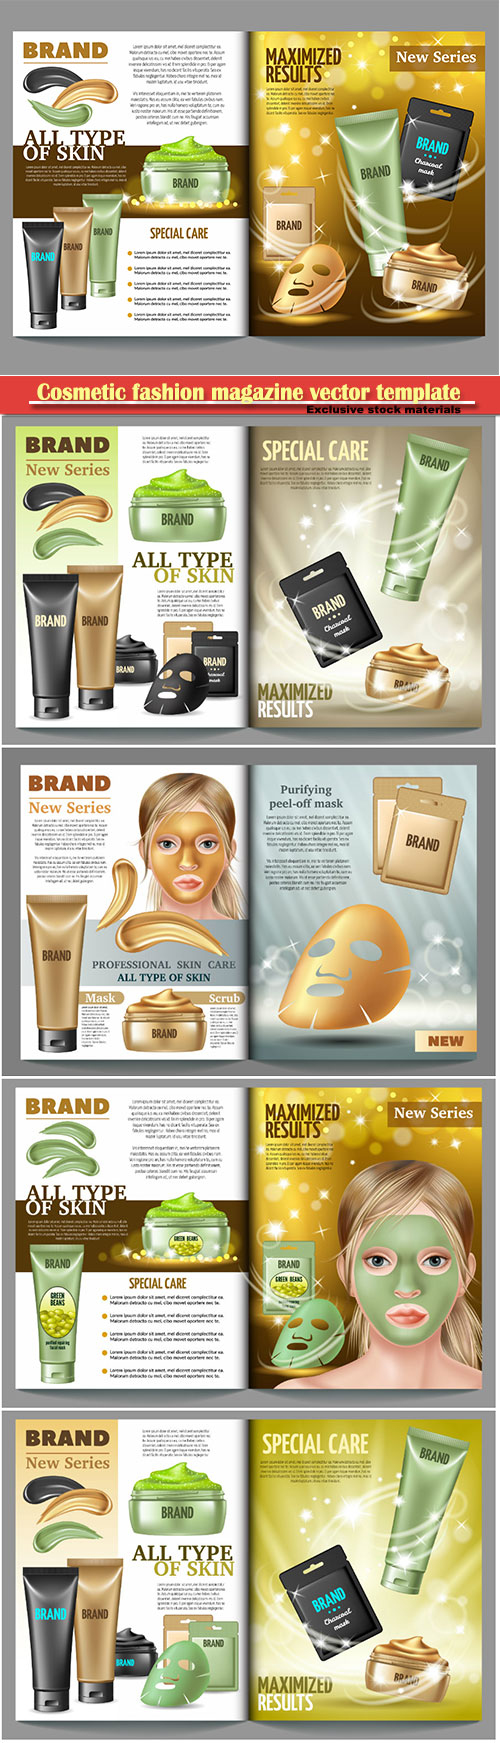 Cosmetic fashion magazine vector template #5